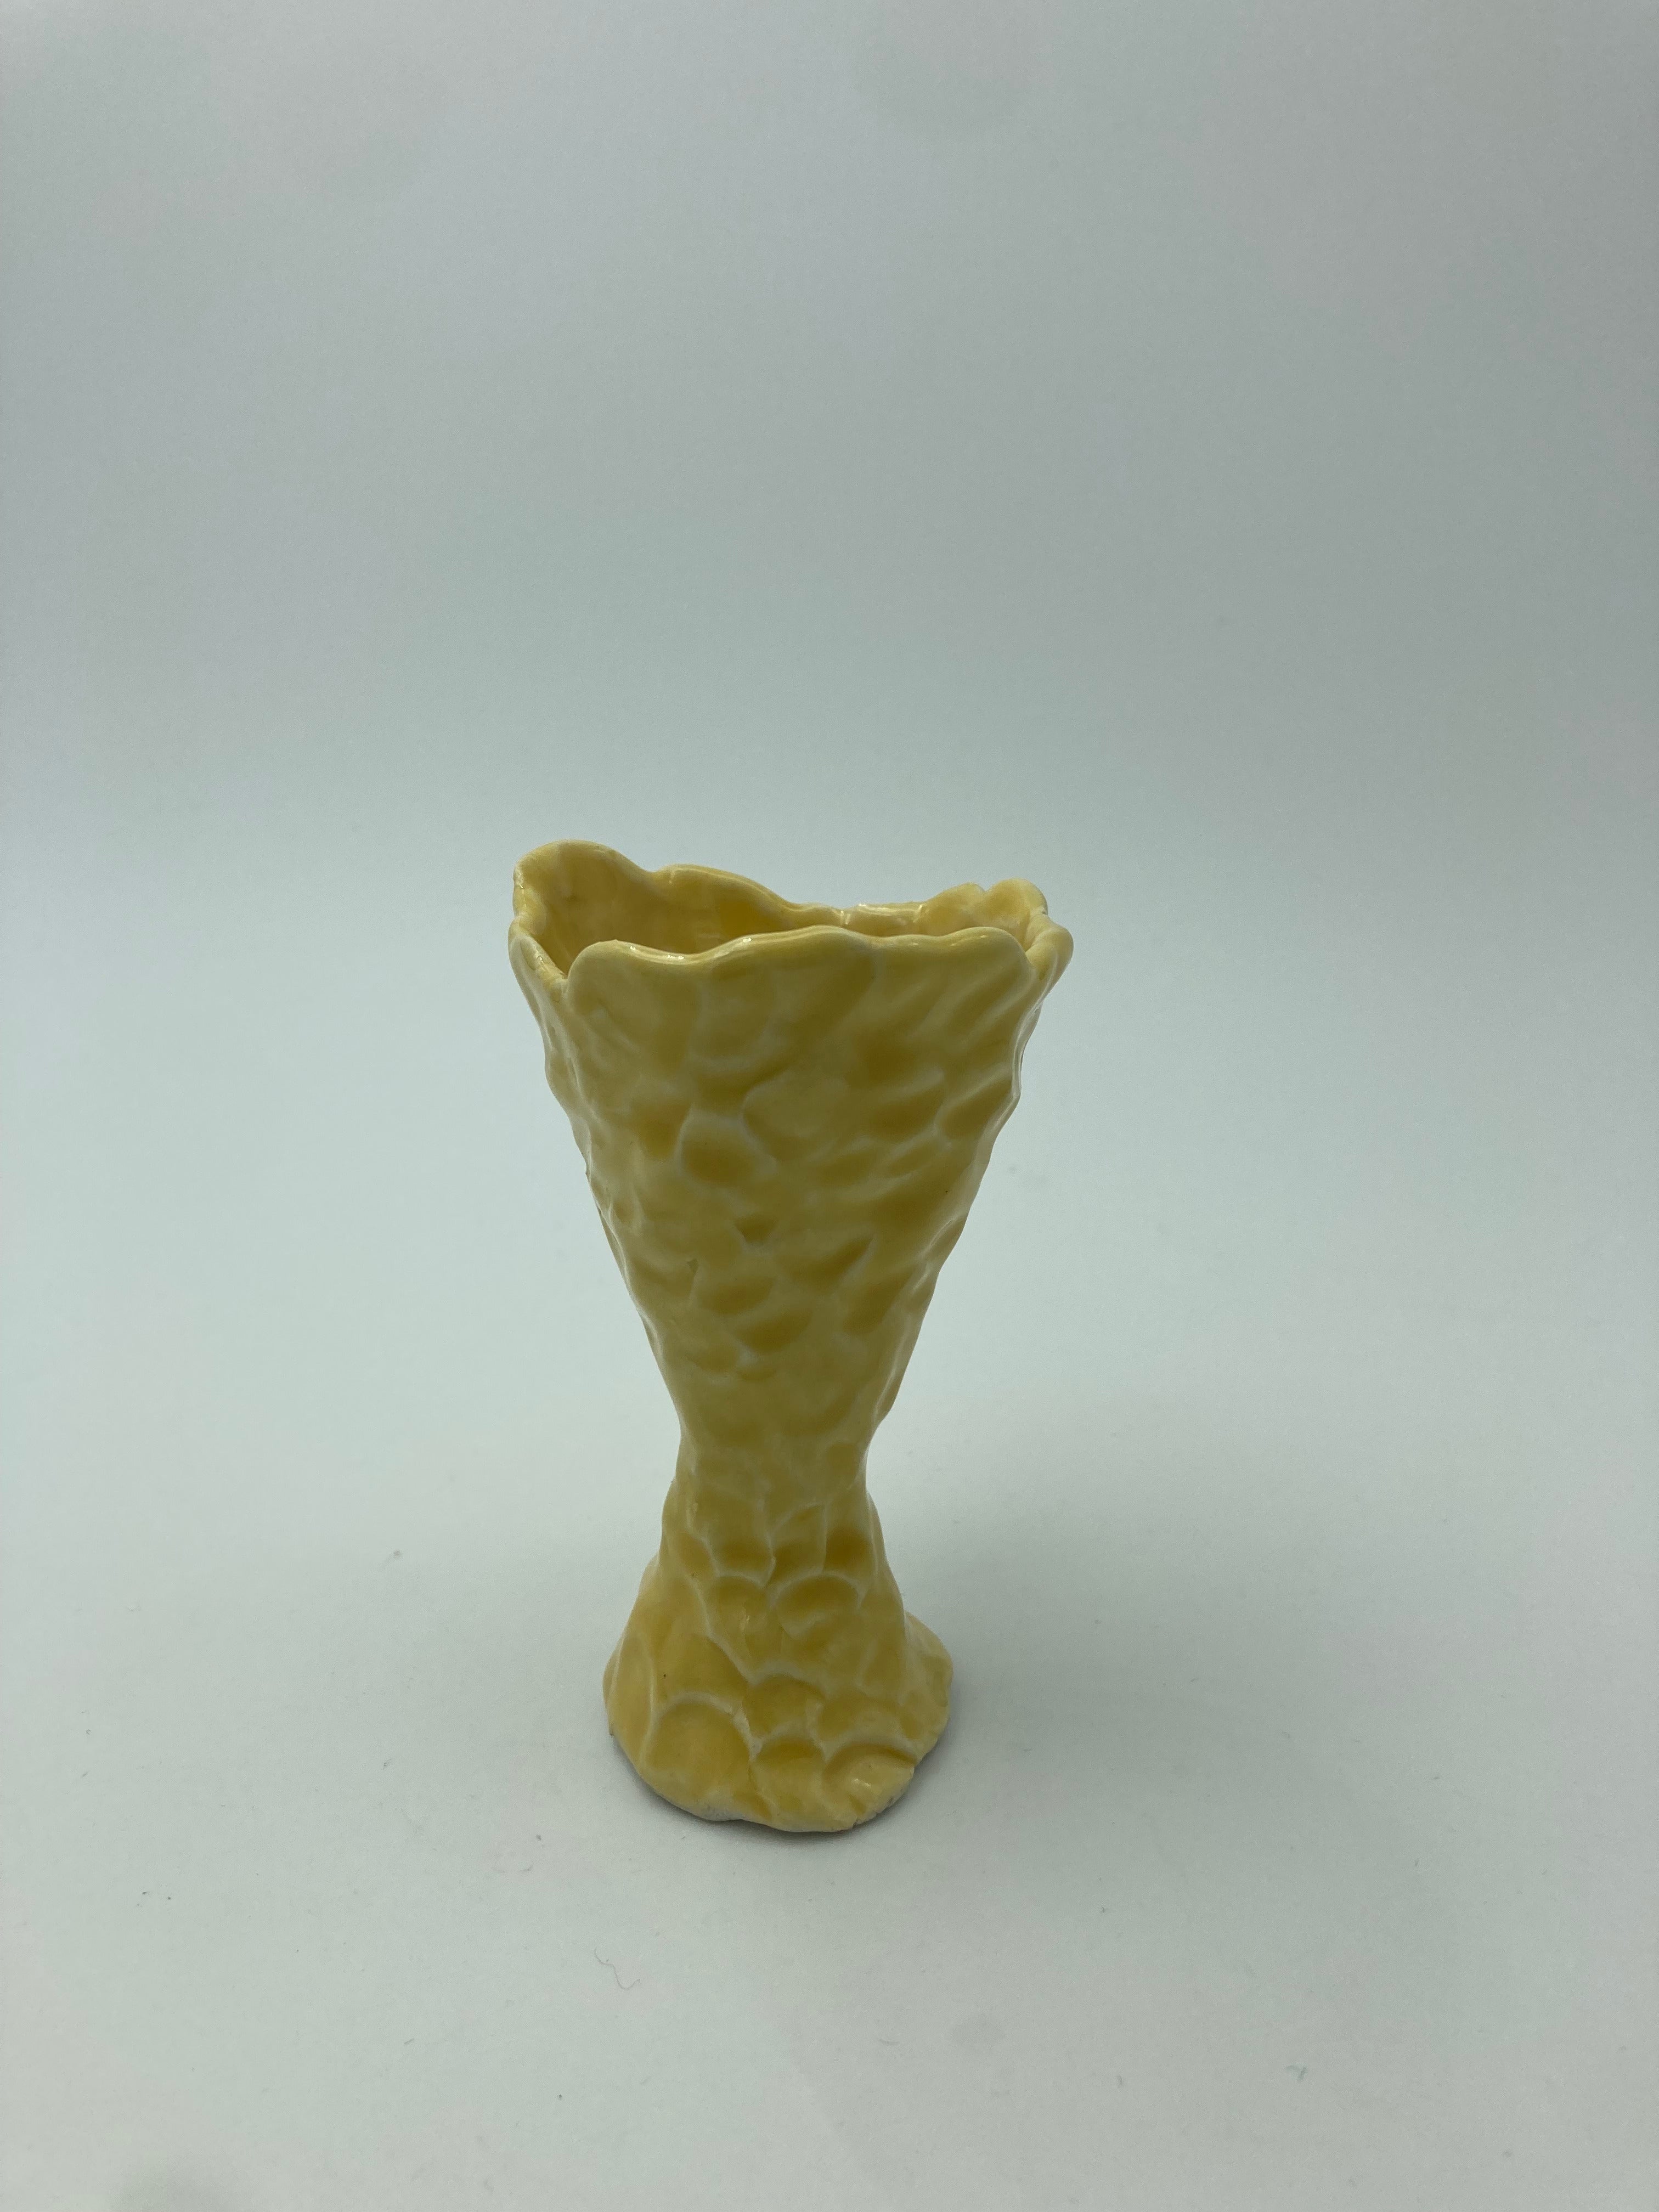 Small yellow decorative object/vase